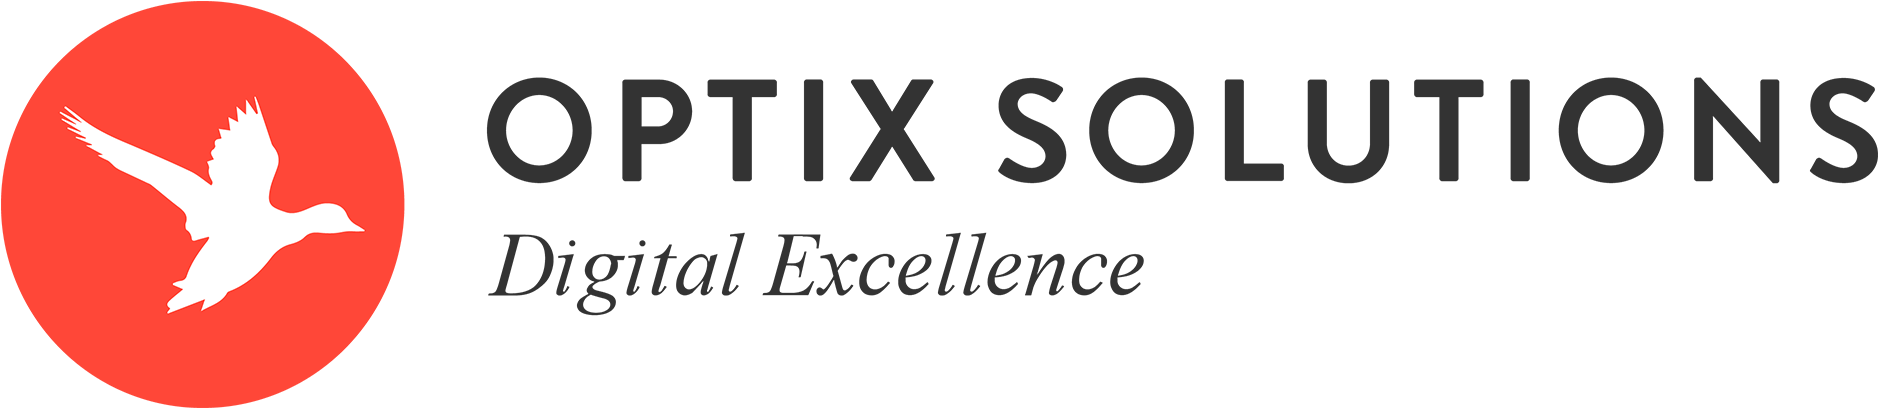 Optix Solutions logo